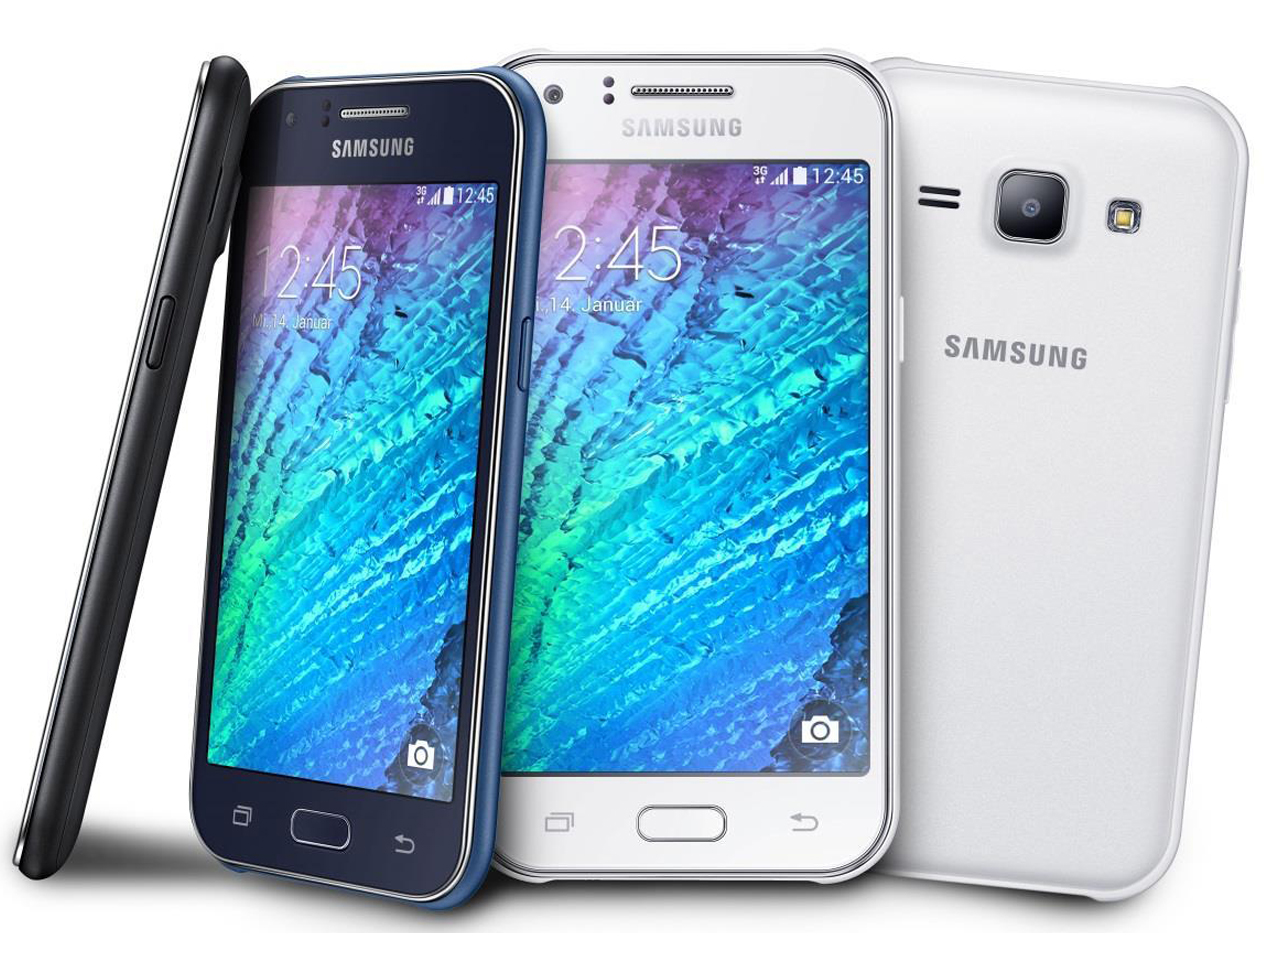 Daftar Harga Samsung Galaxy Seri "J", Seri Harga Murah Mei 